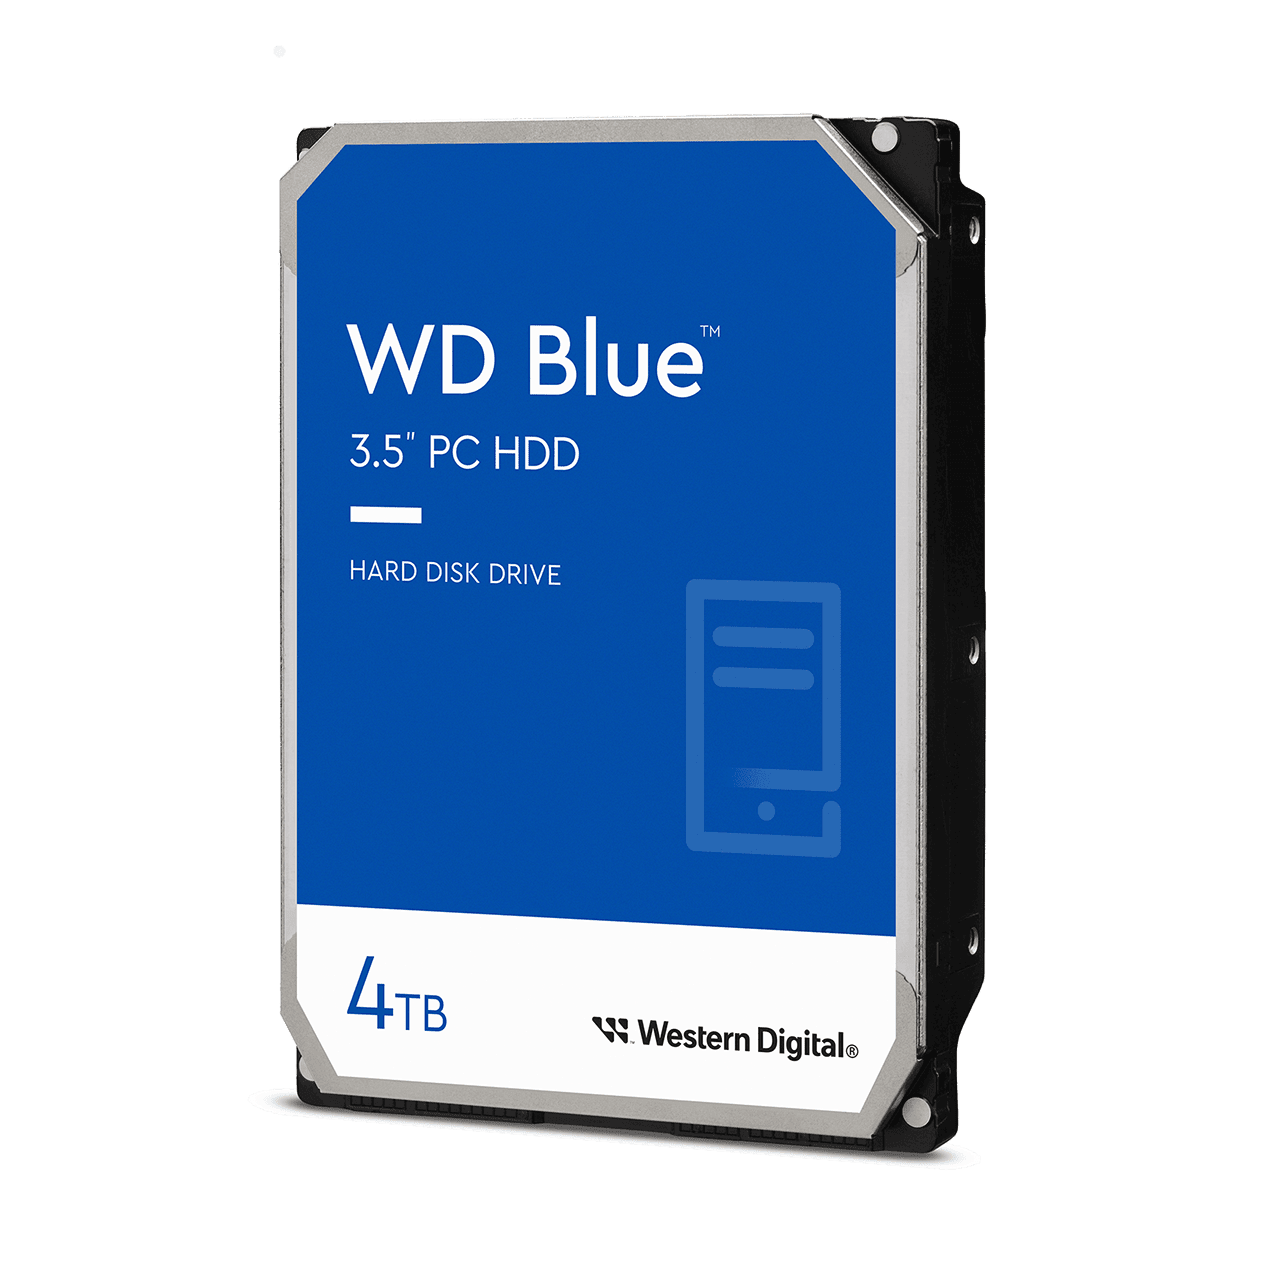 WD Blue 3.5in PC Hard Drive - 4TB - Image9